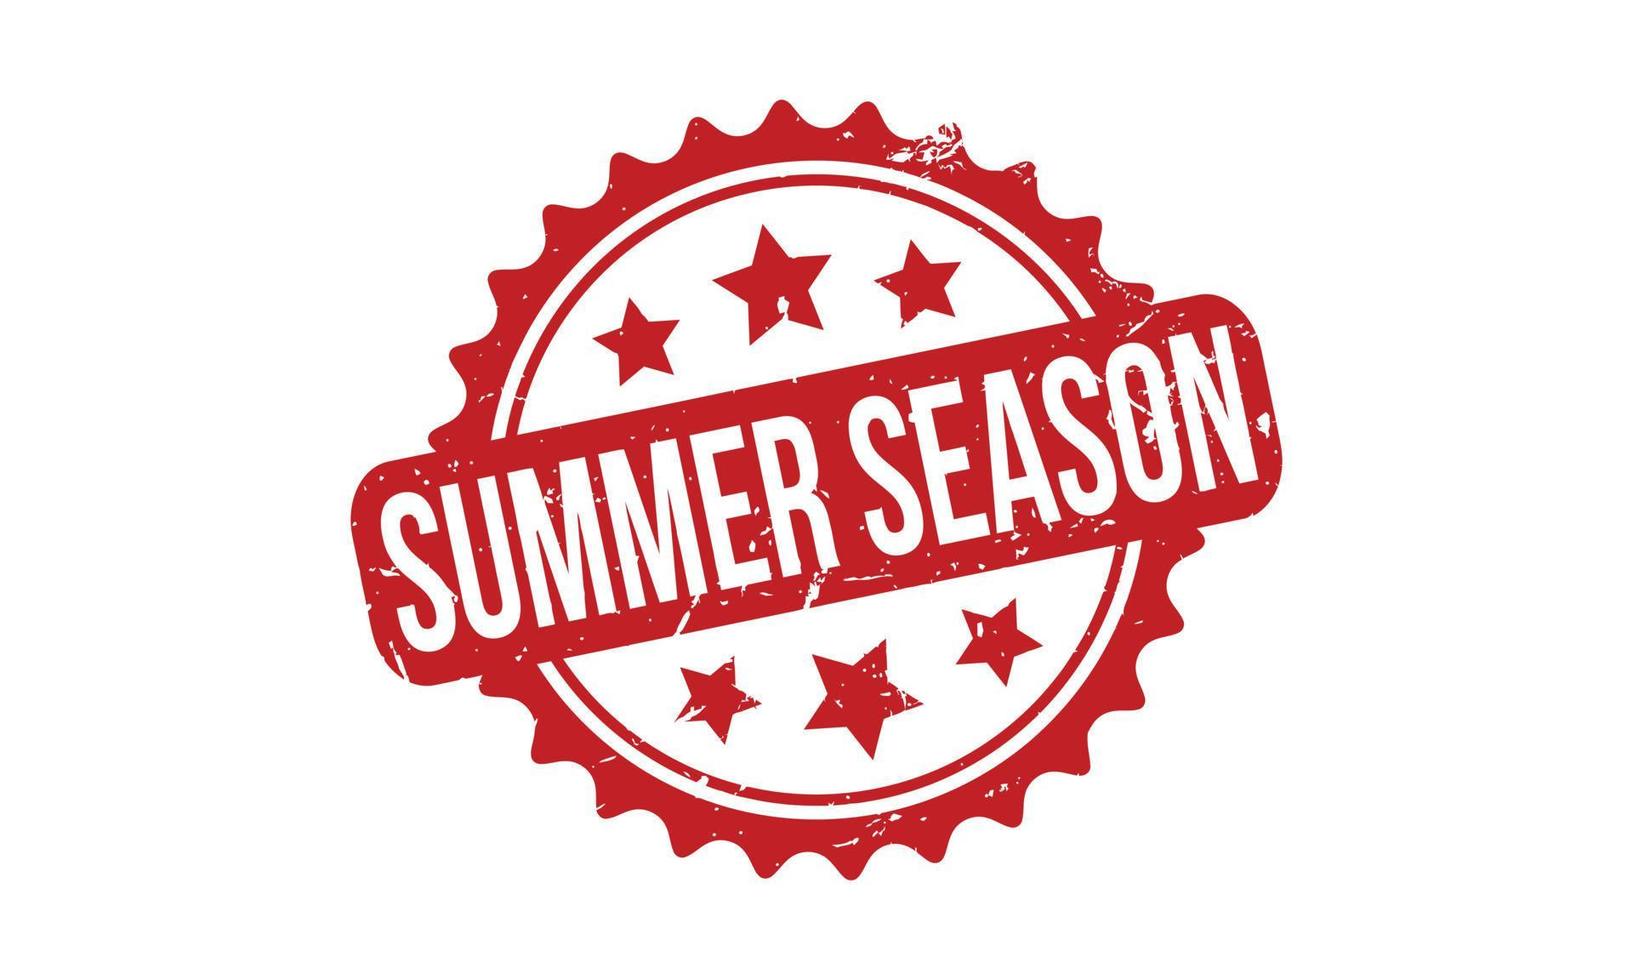 Summer Season Rubber Stamp. Red Summer Season Rubber Grunge Stamp Seal Vector Illustration